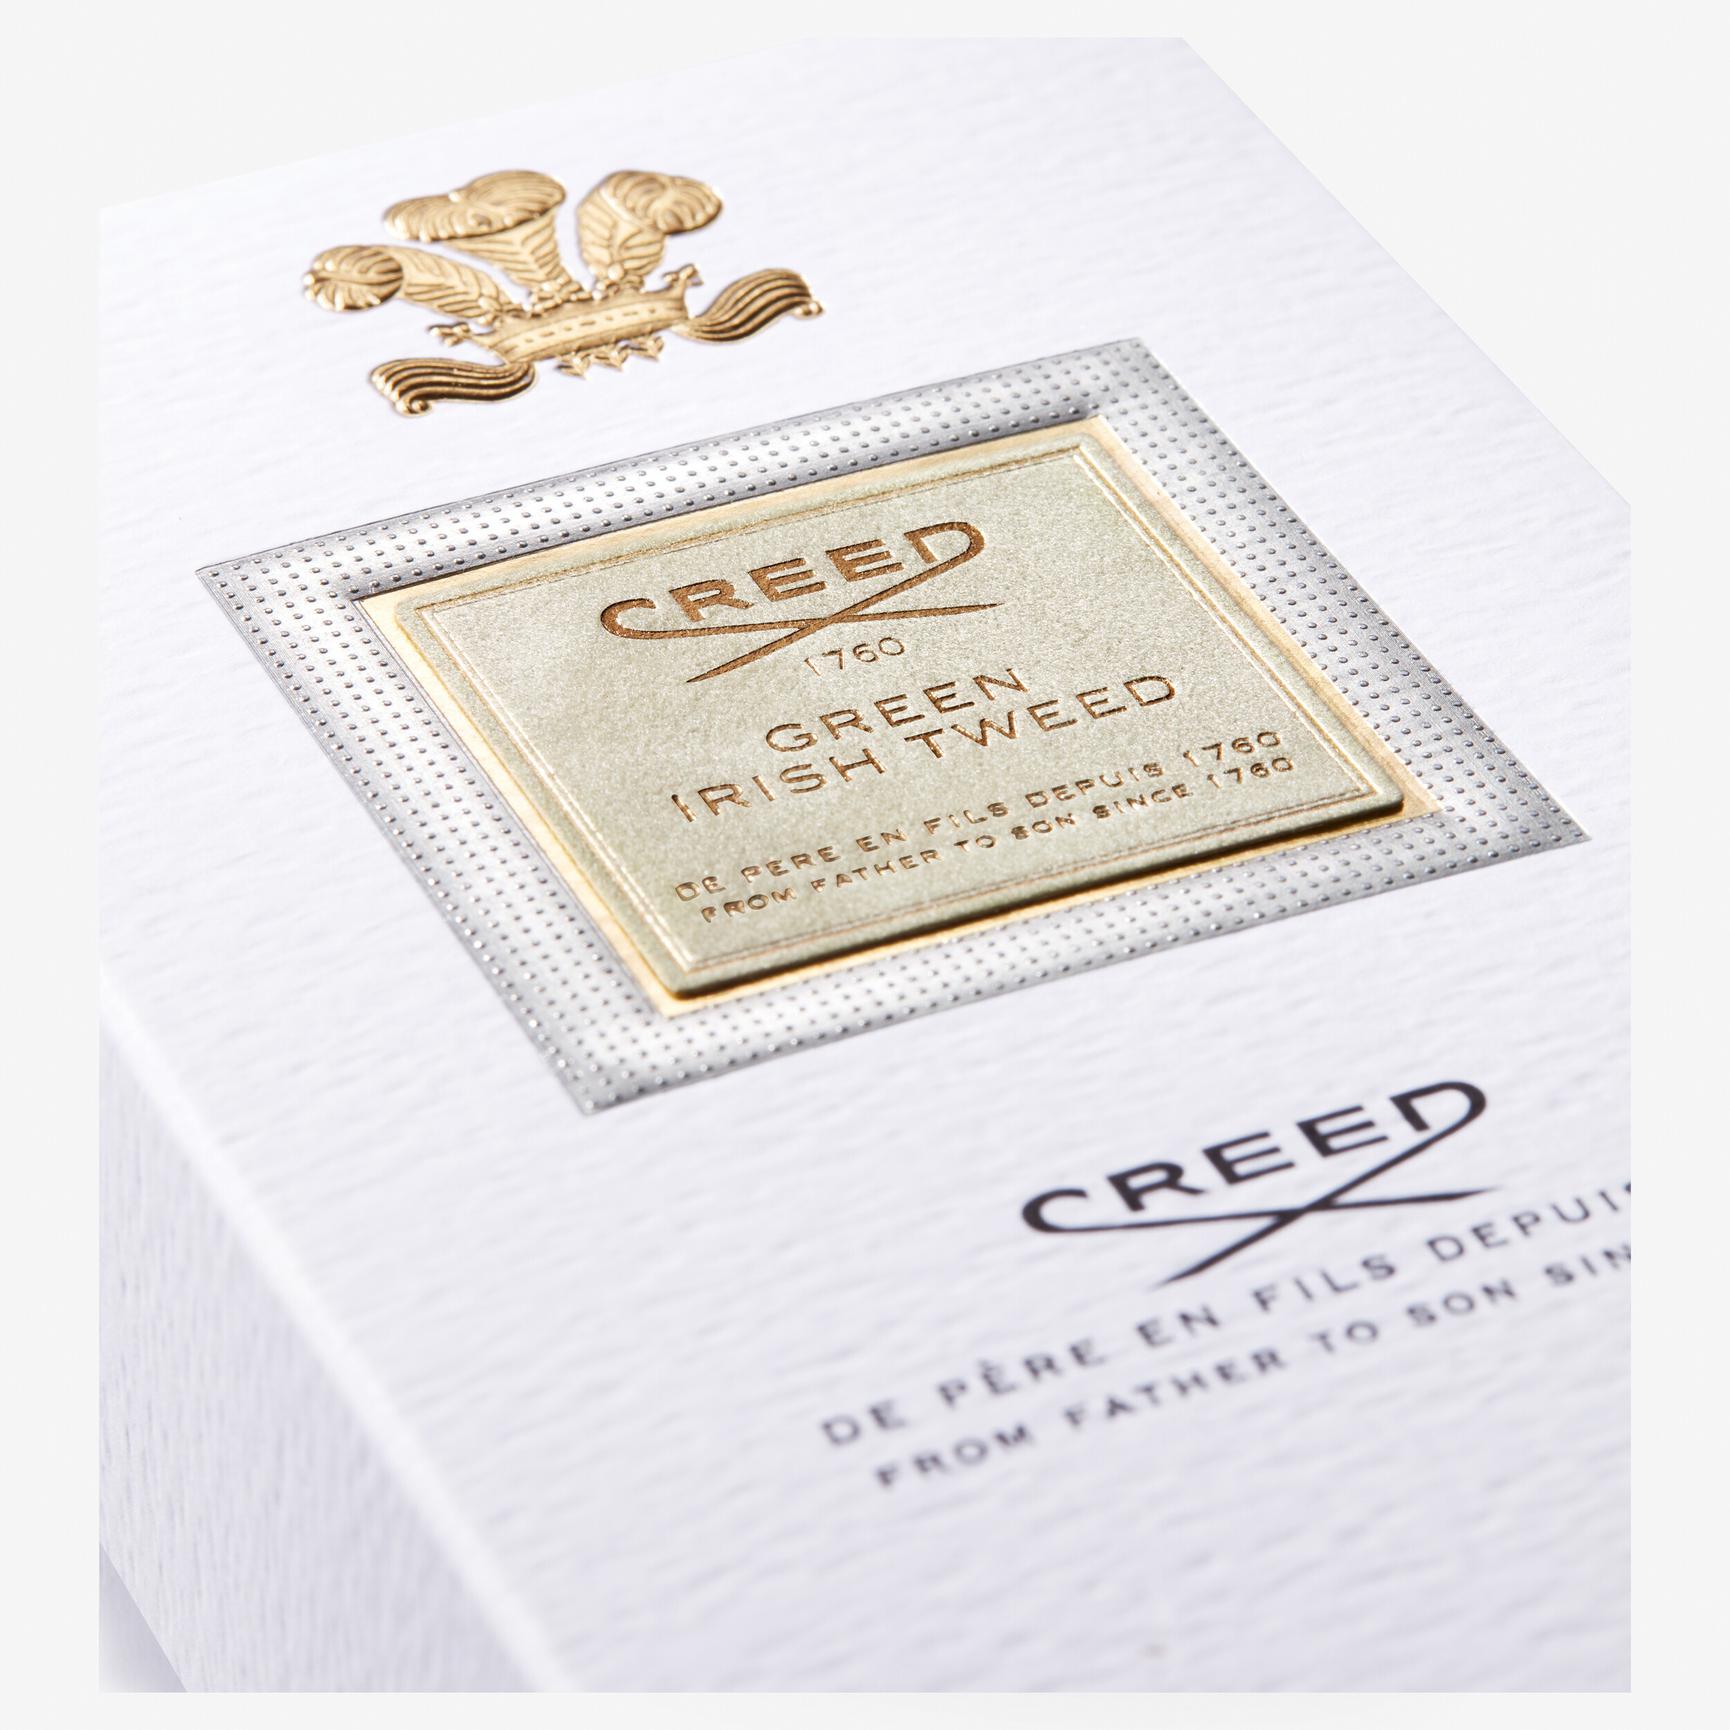 Creed Green Irish Tweed Eau de Parfum - Perfume Planet 